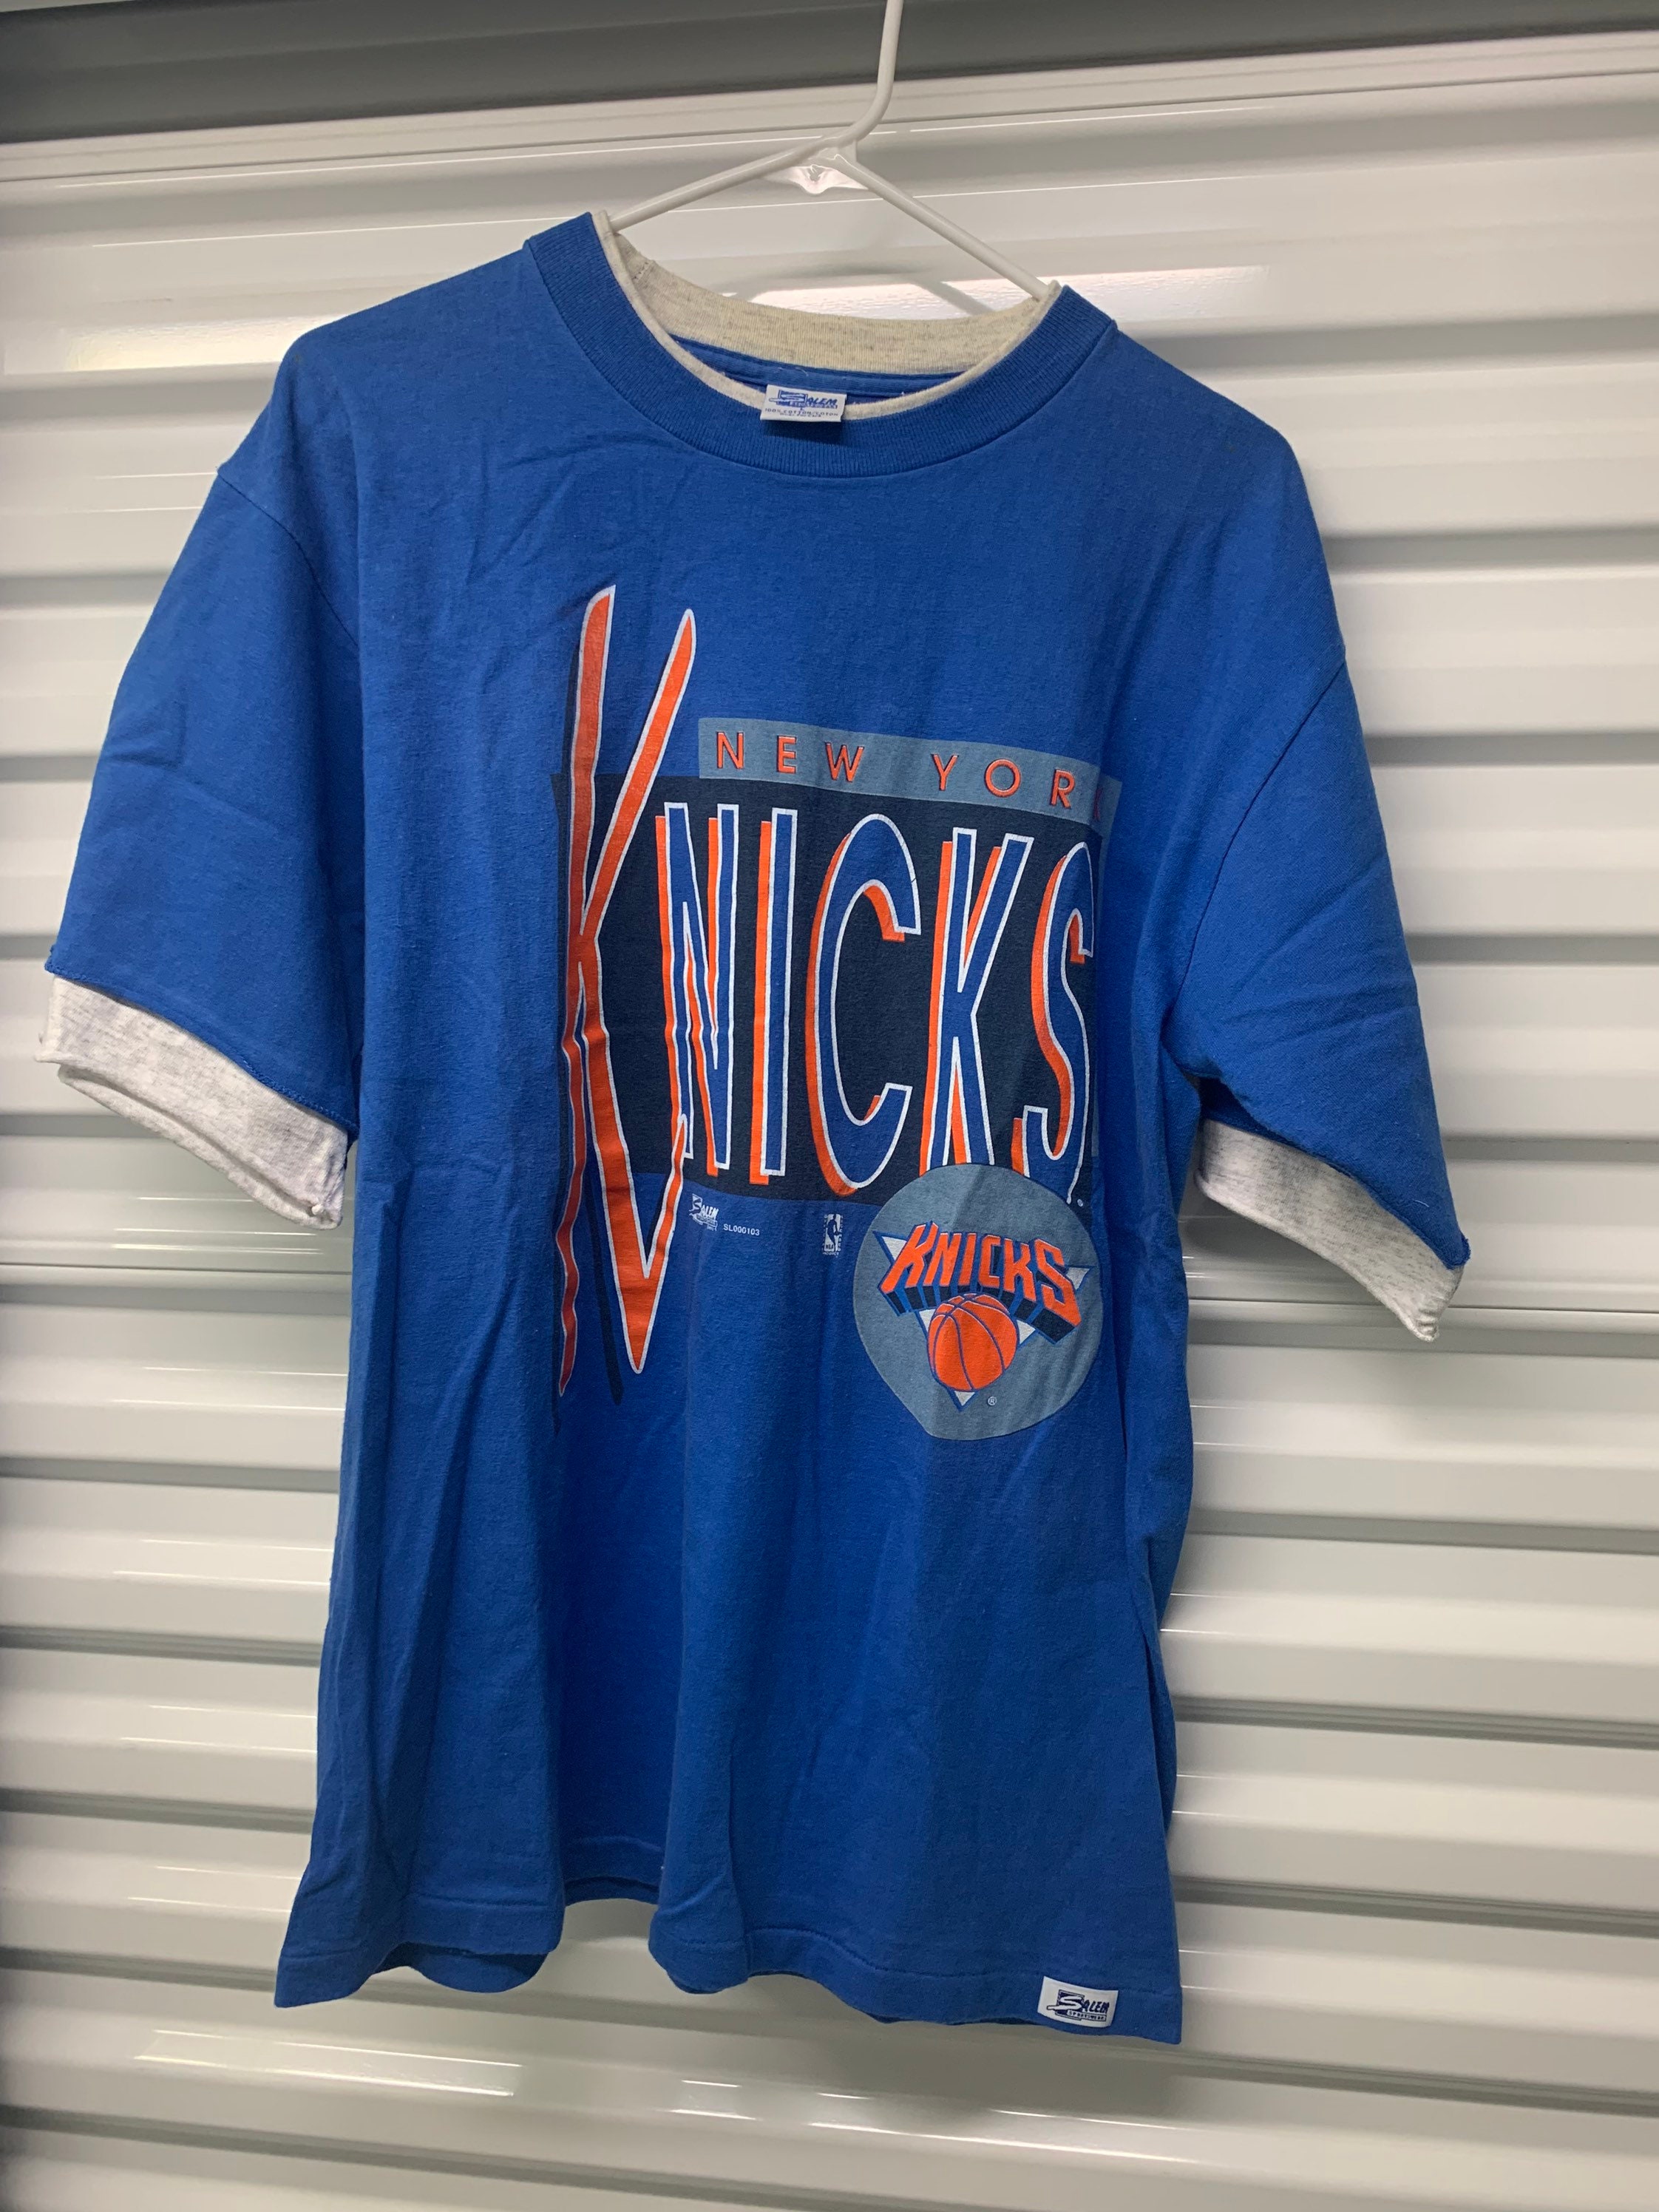 New York Knicks legend art vintage T-shirt, hoodie, sweater, long sleeve  and tank top